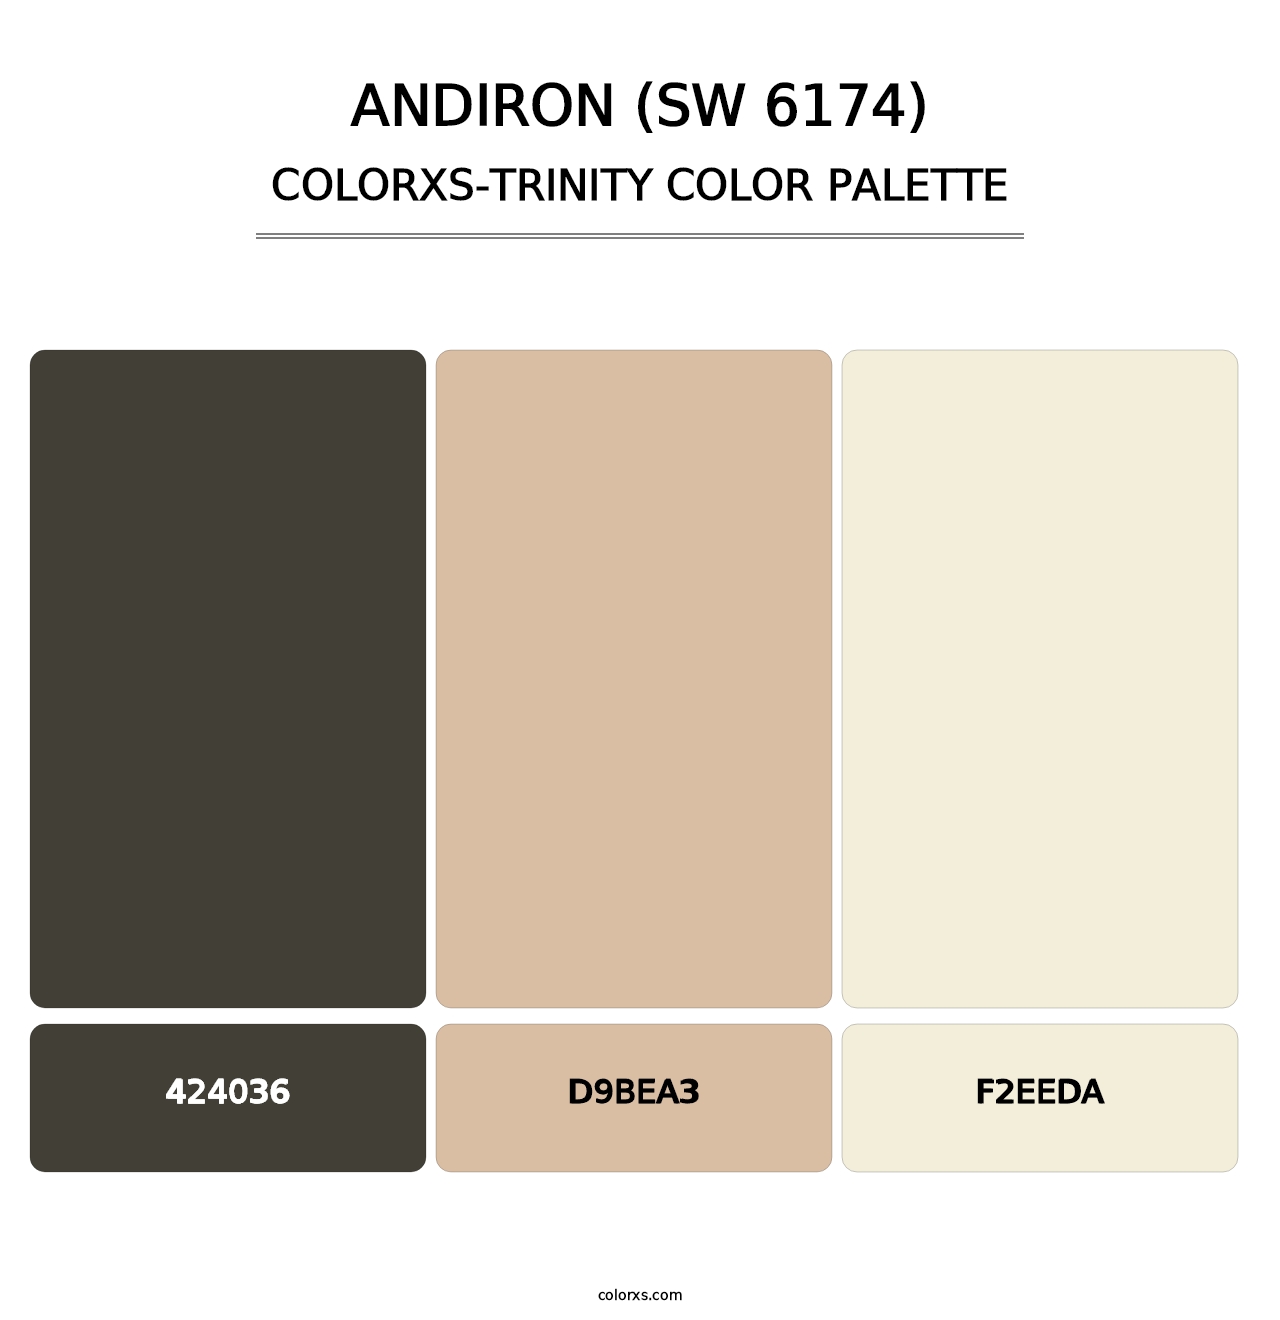 Andiron (SW 6174) - Colorxs Trinity Palette